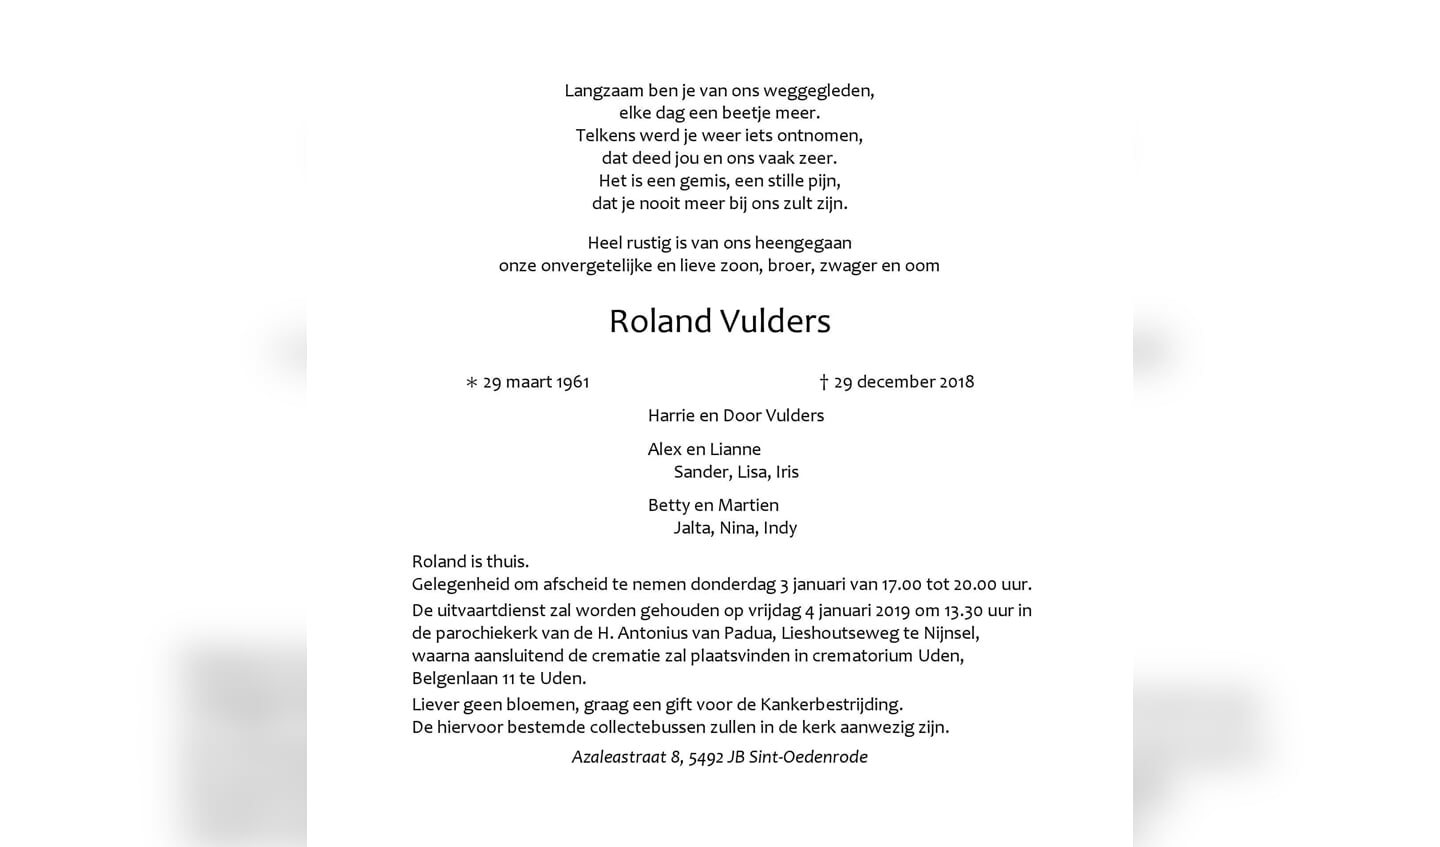 Overlijdensbericht Roland Vulders.